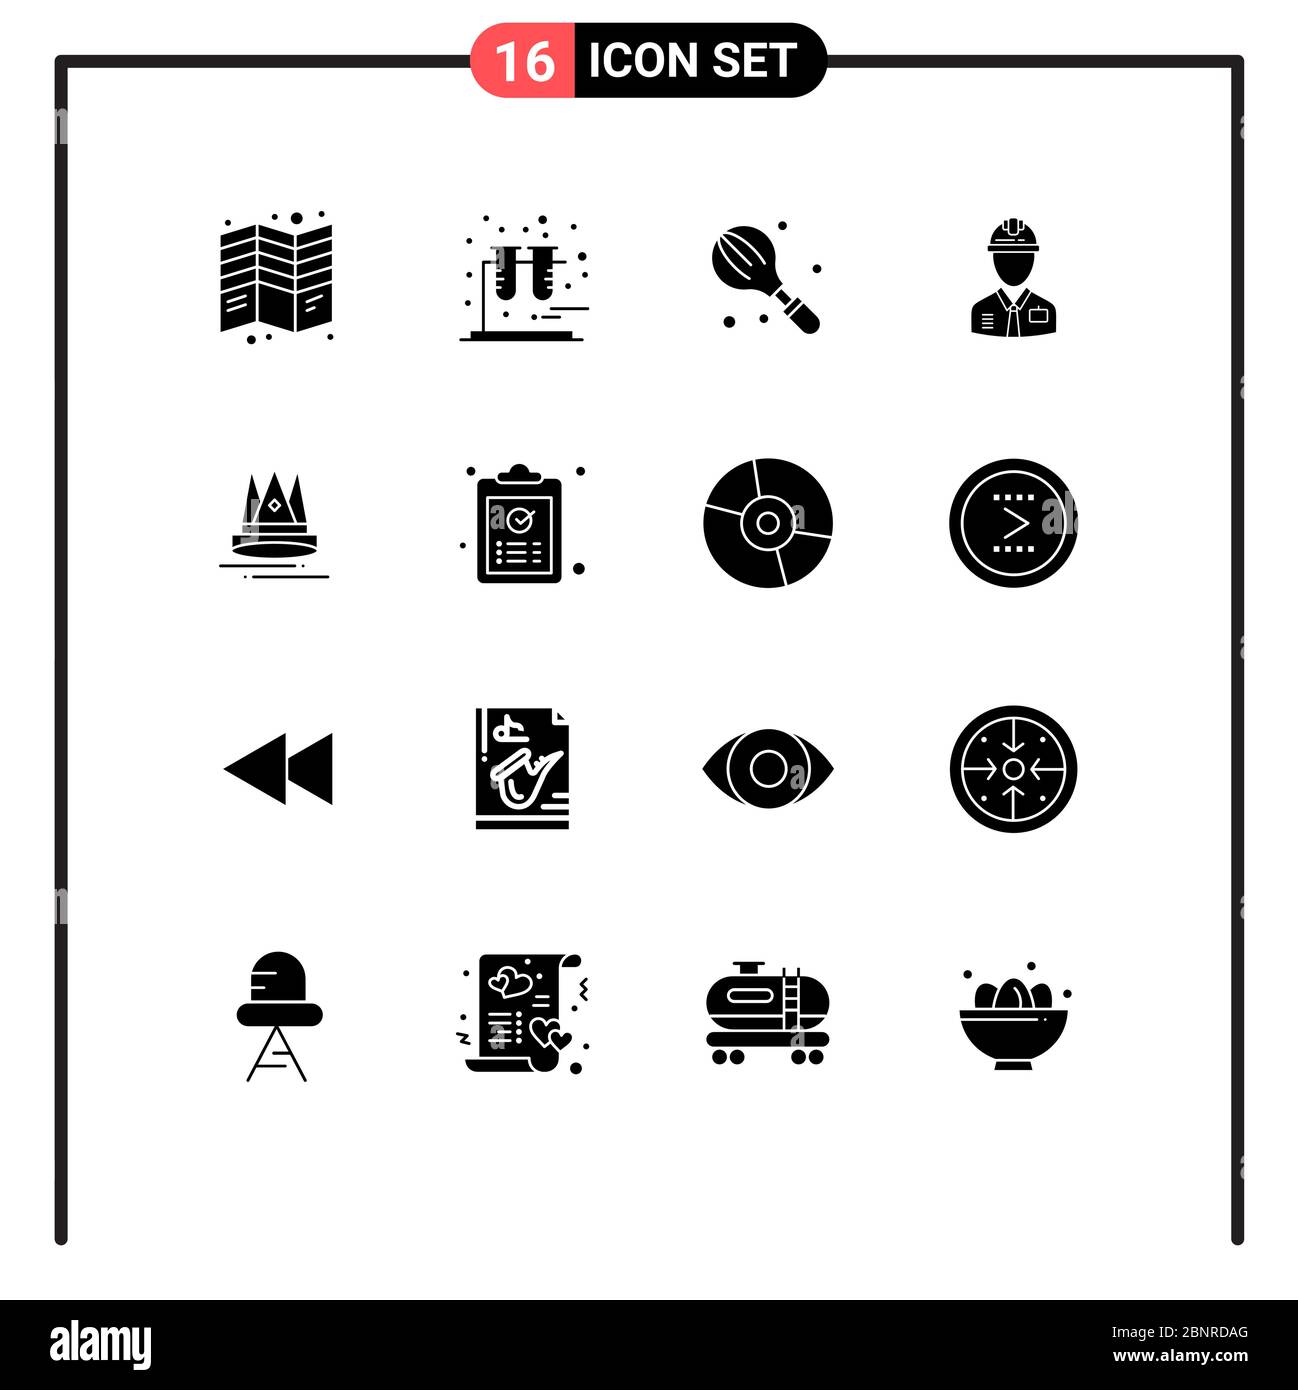 16 Modern Construction Company Logo Ideas